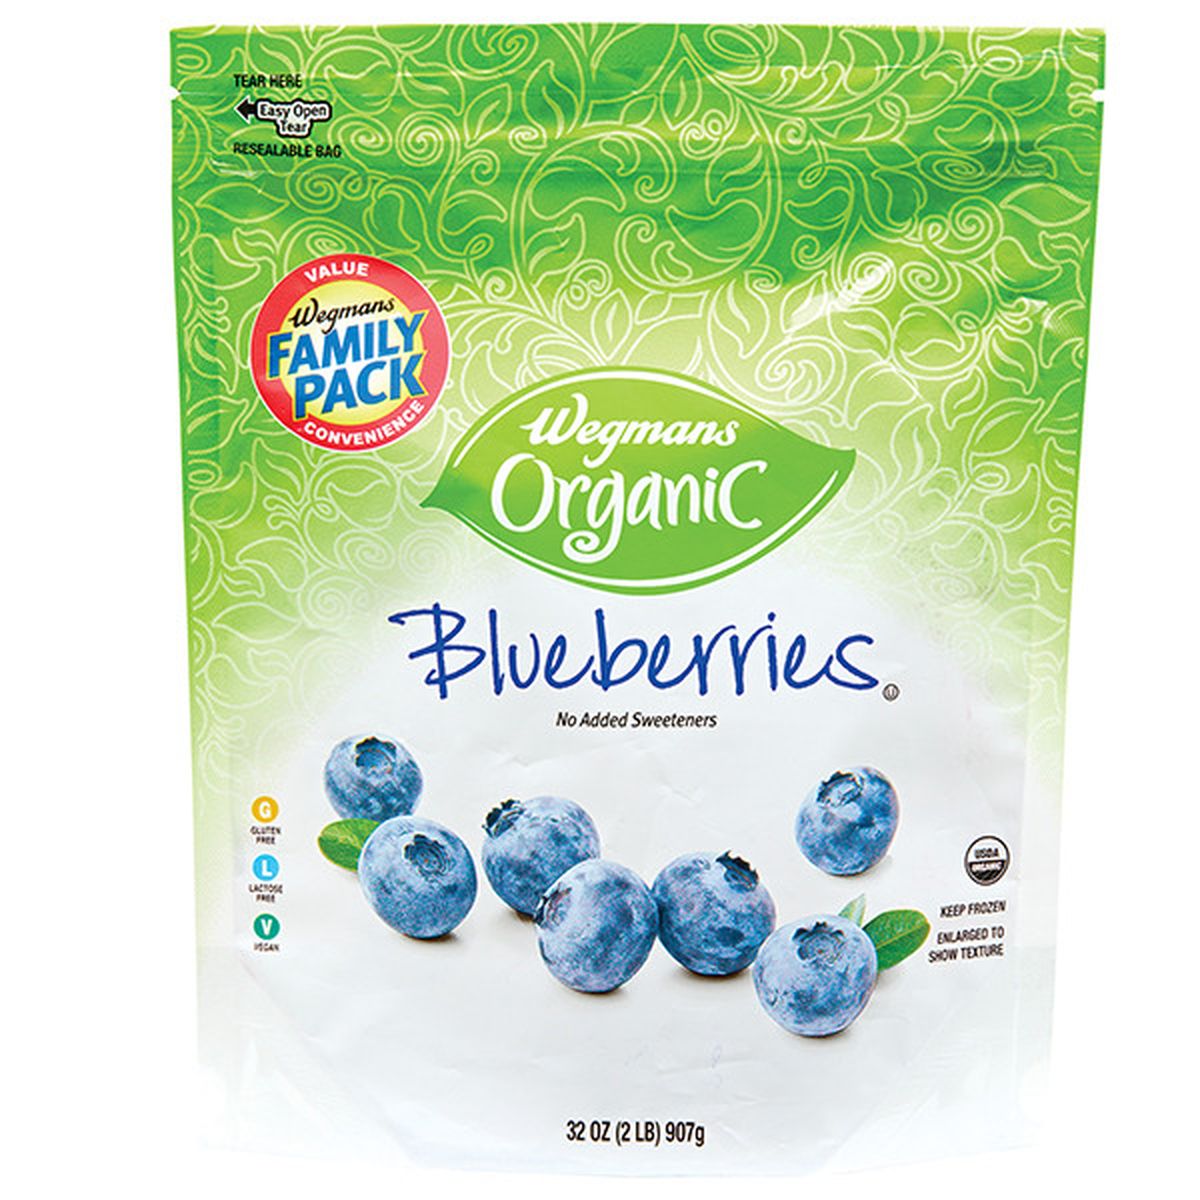 Calories in Wegmans Organic Frozen Blueberries, FAMILY PACK